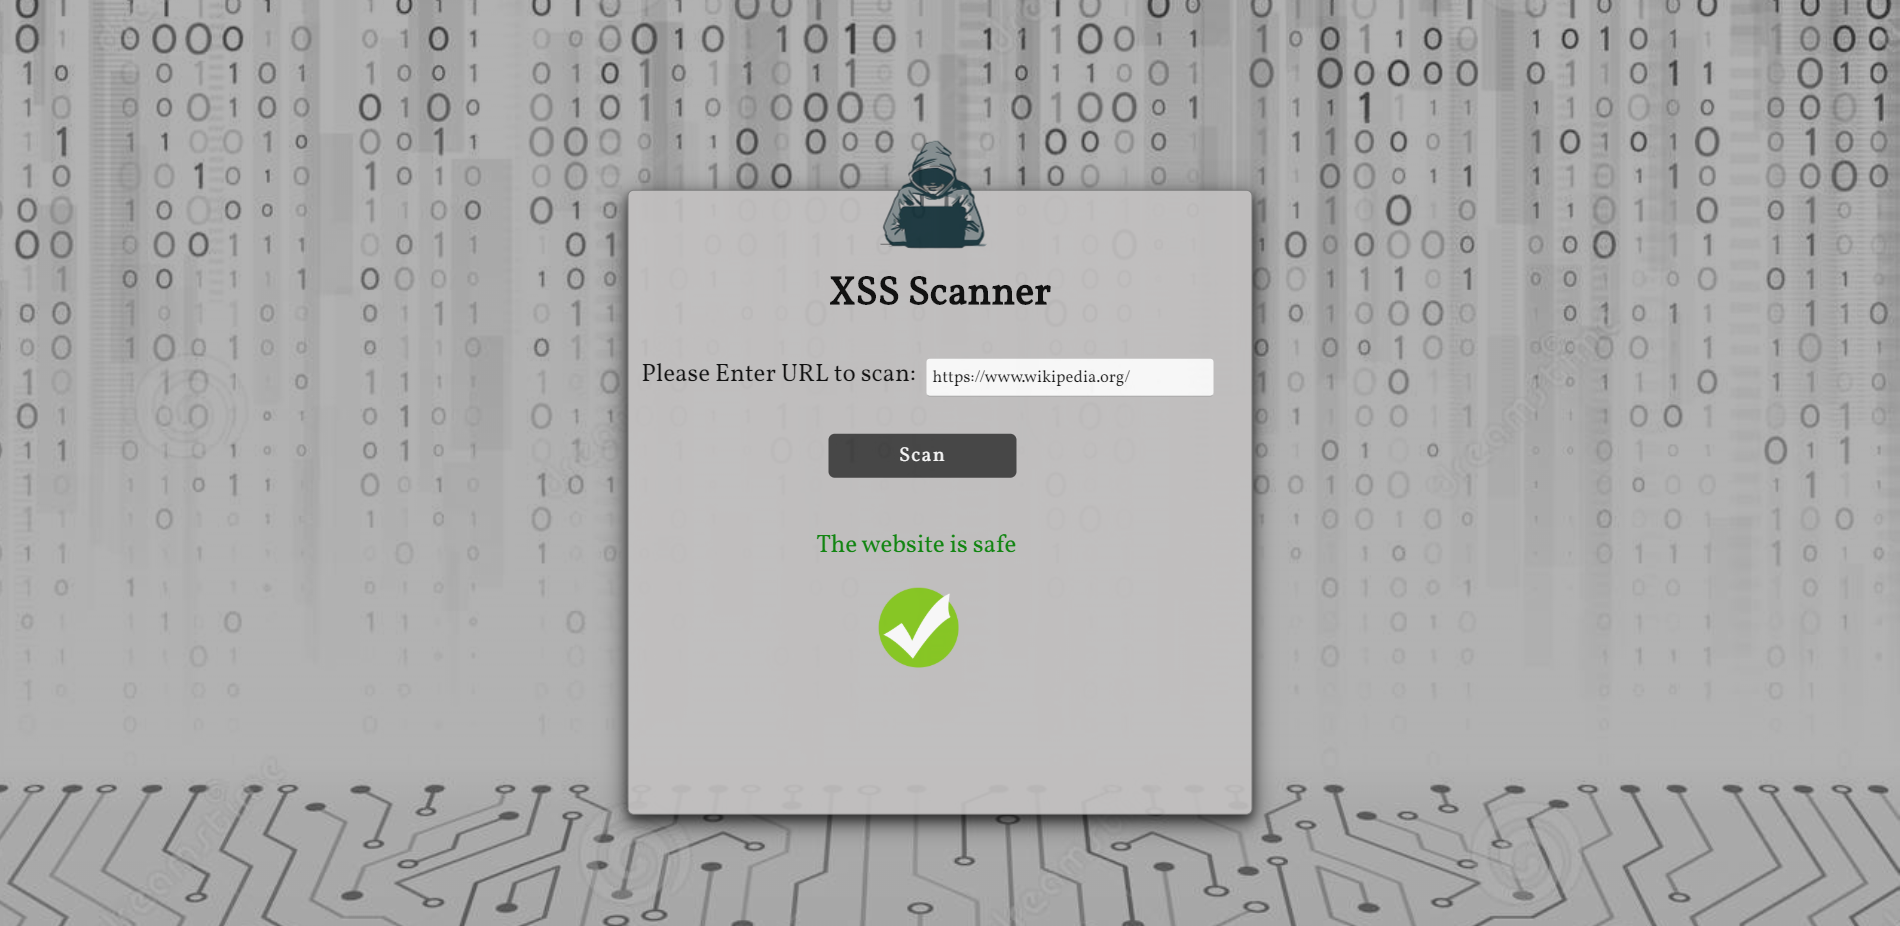 Shuriken - XSS payload testing tool with screenshot capture